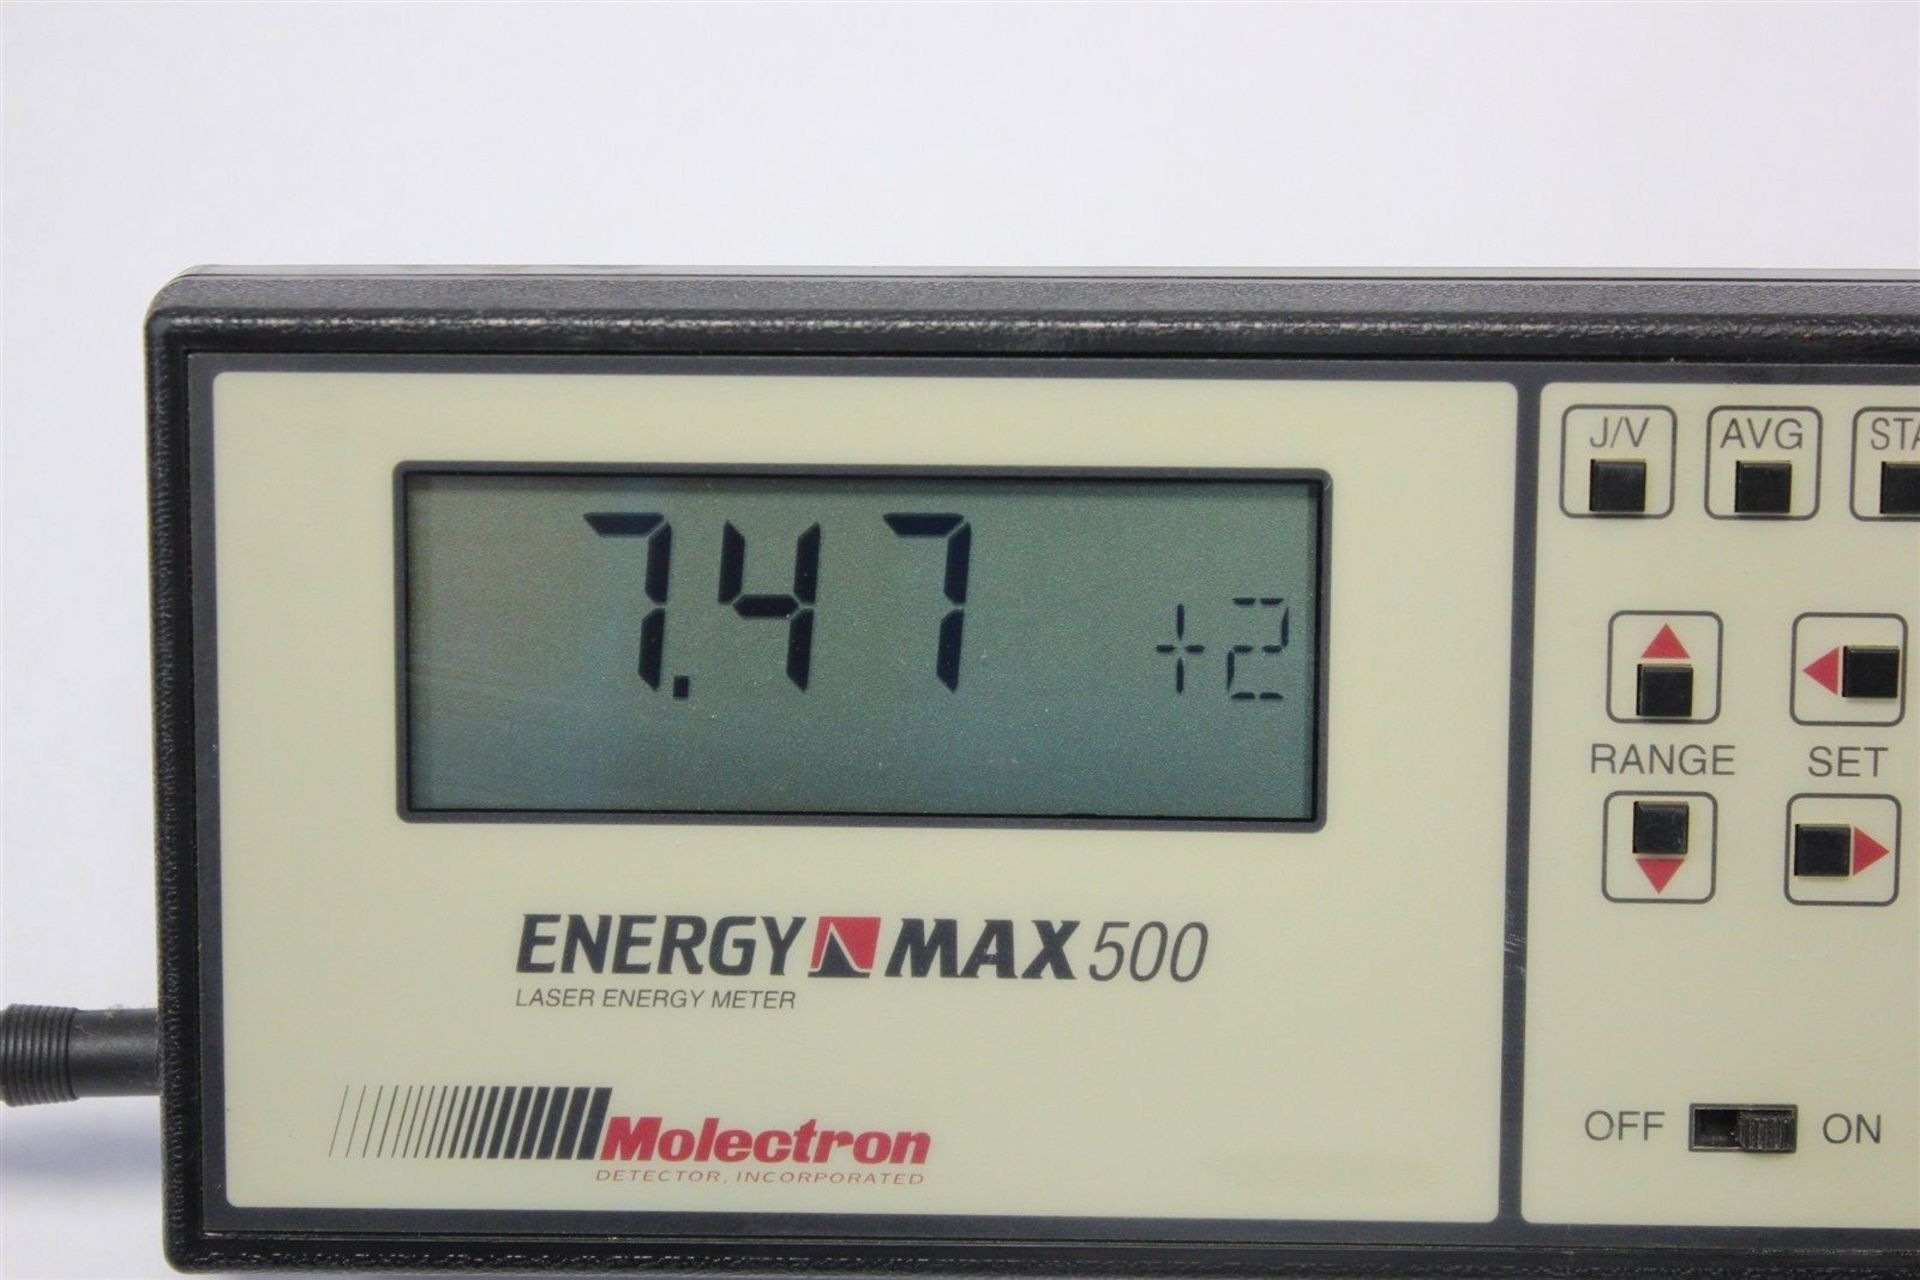 Molectron Em500 Energy Max 500 Laser Energy Meter - Image 3 of 7